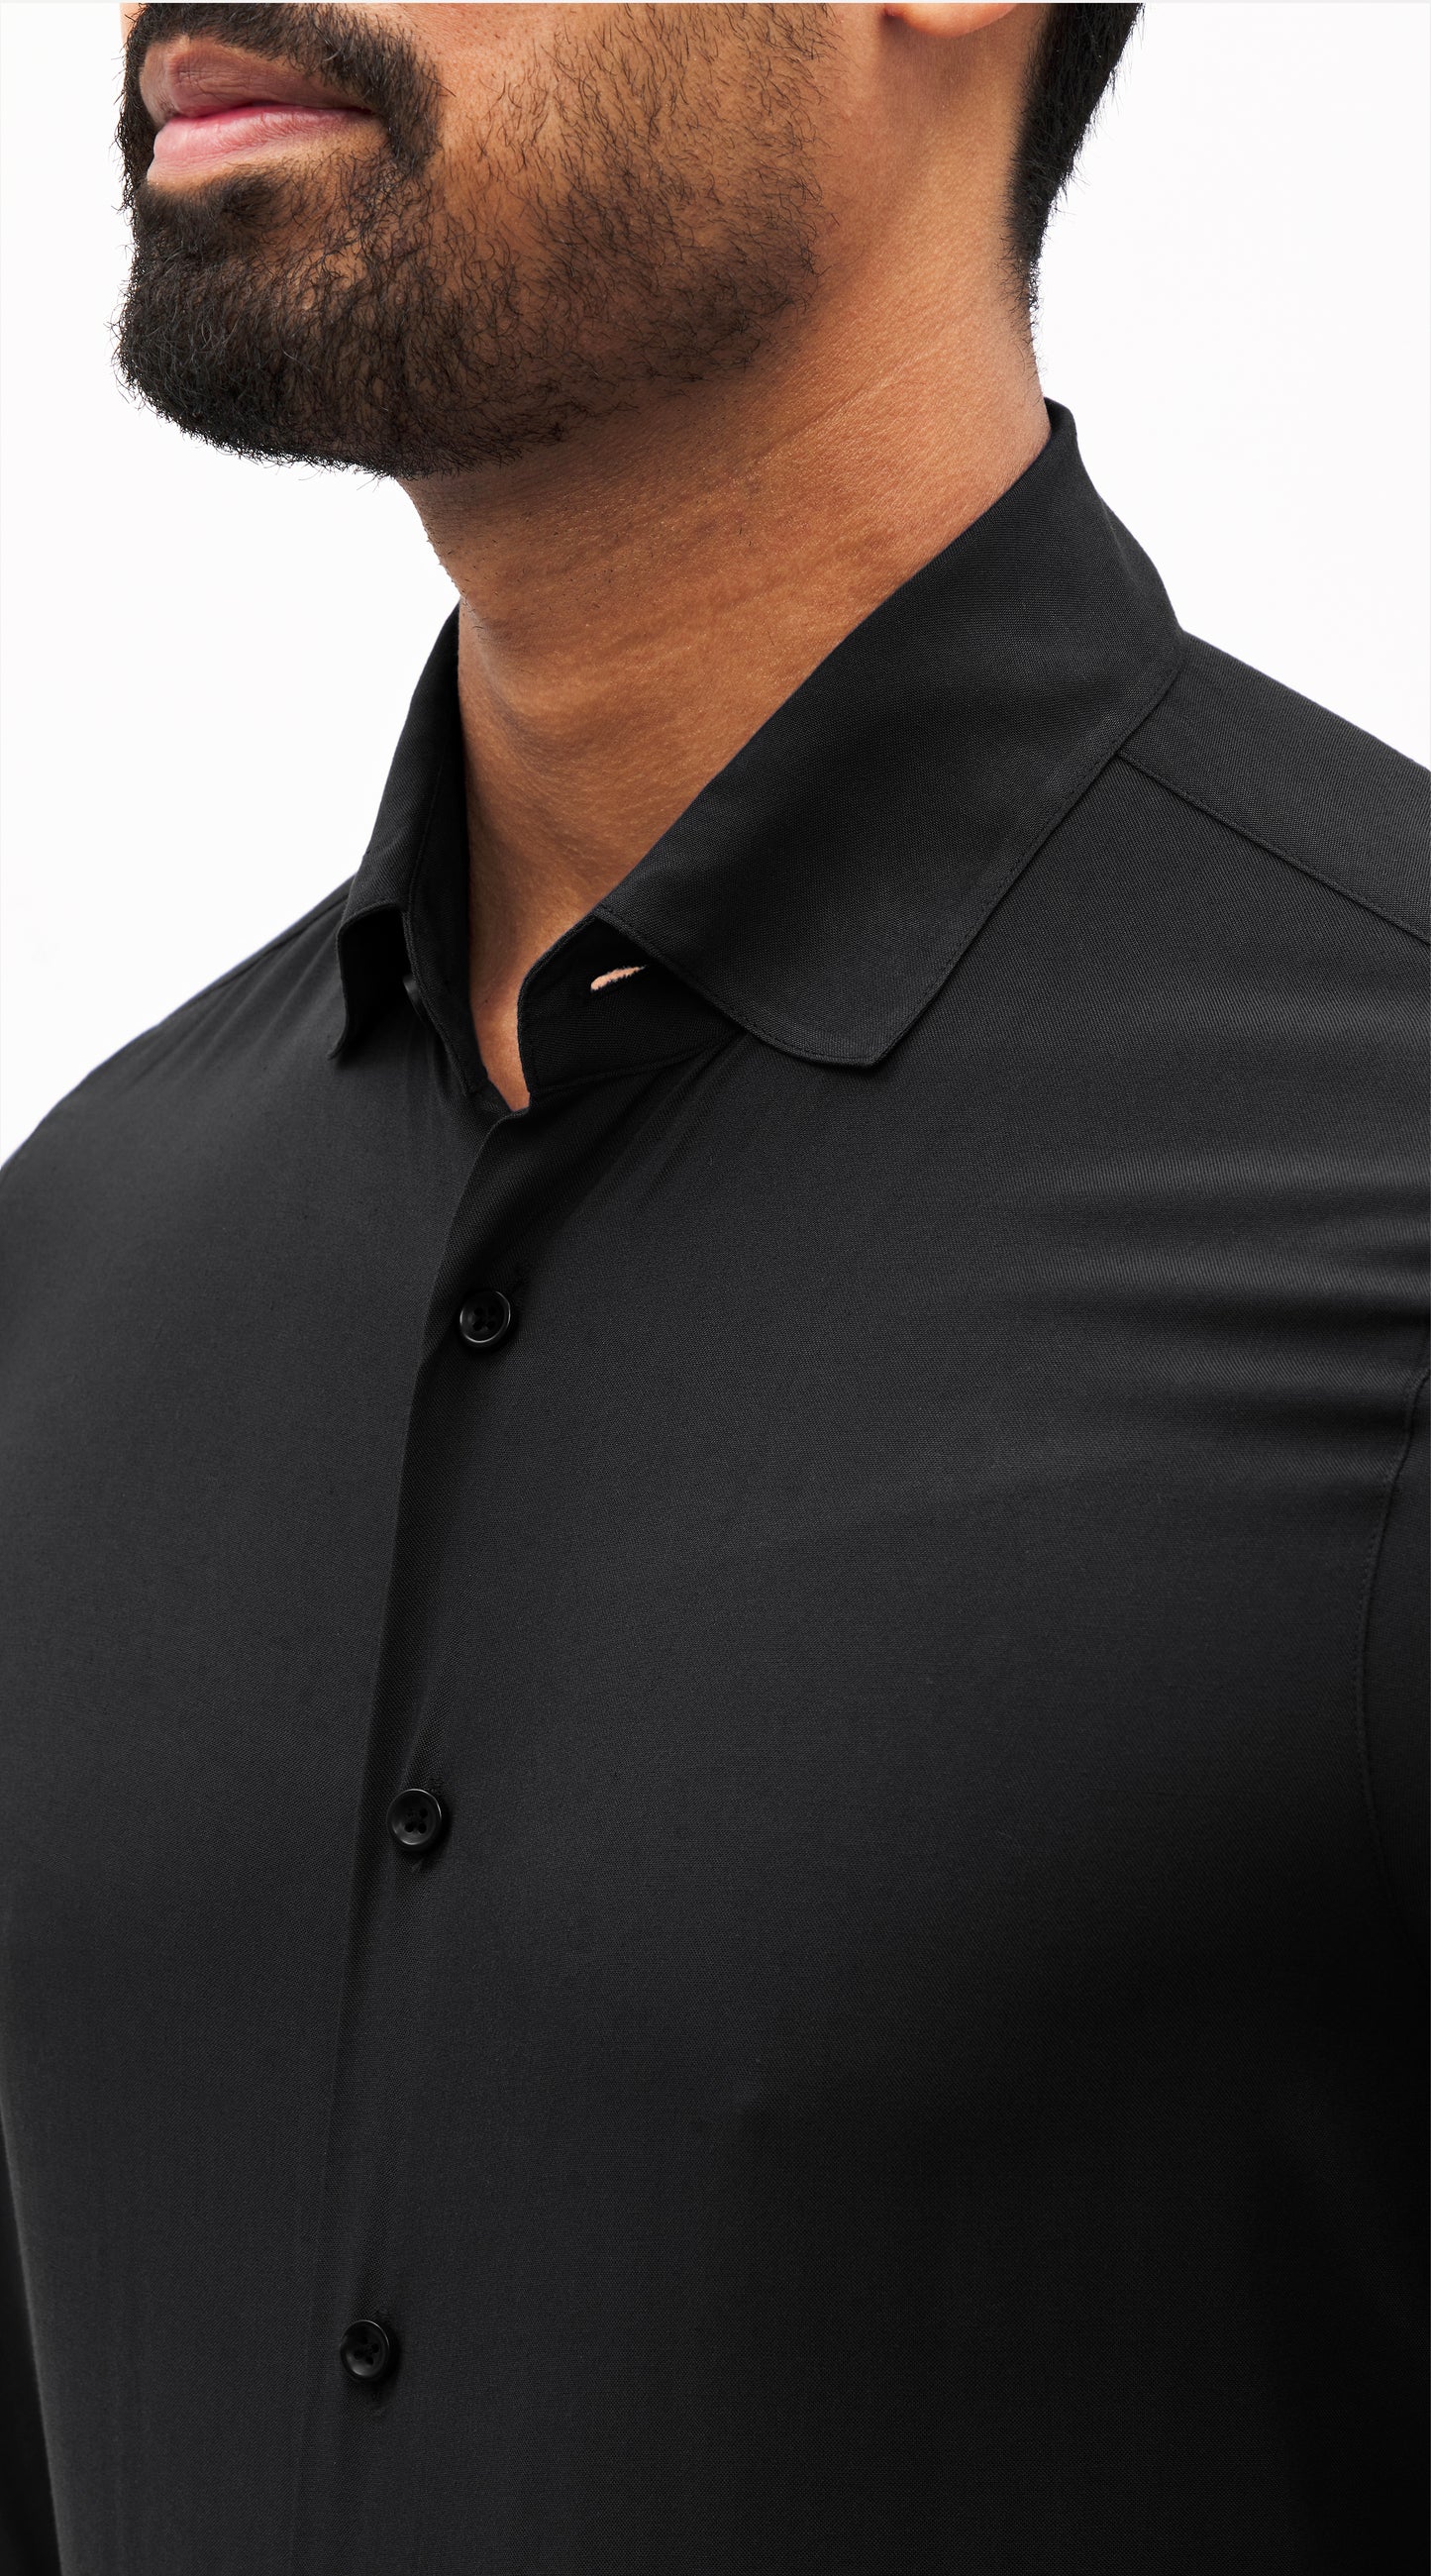 Black Viscose Shirt